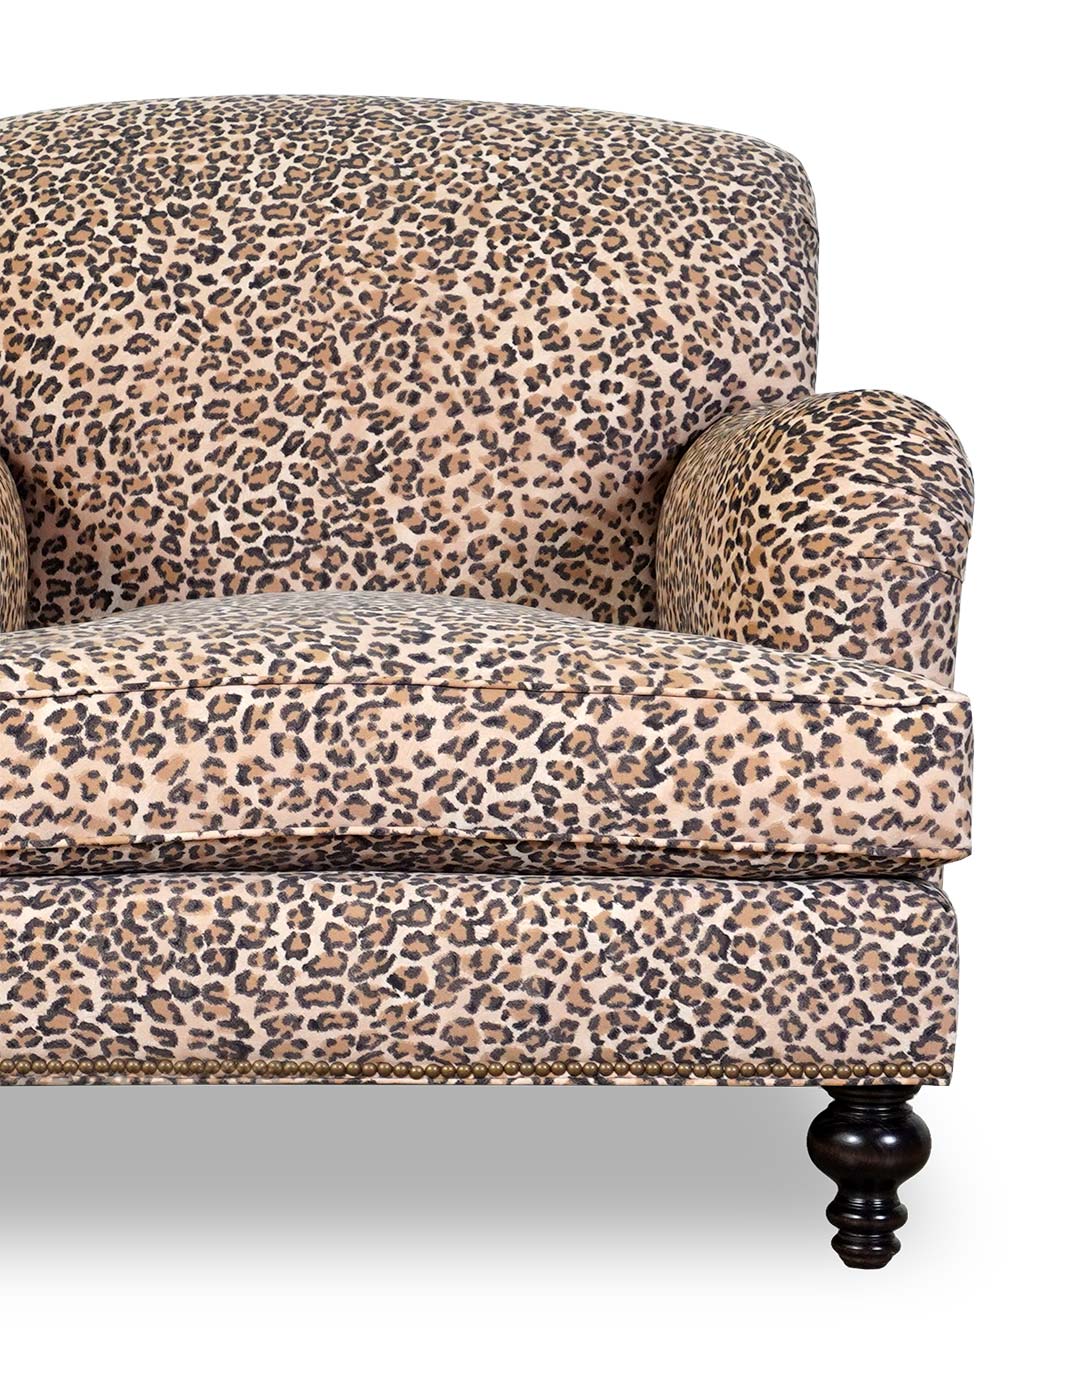 Basel armchair in animal print